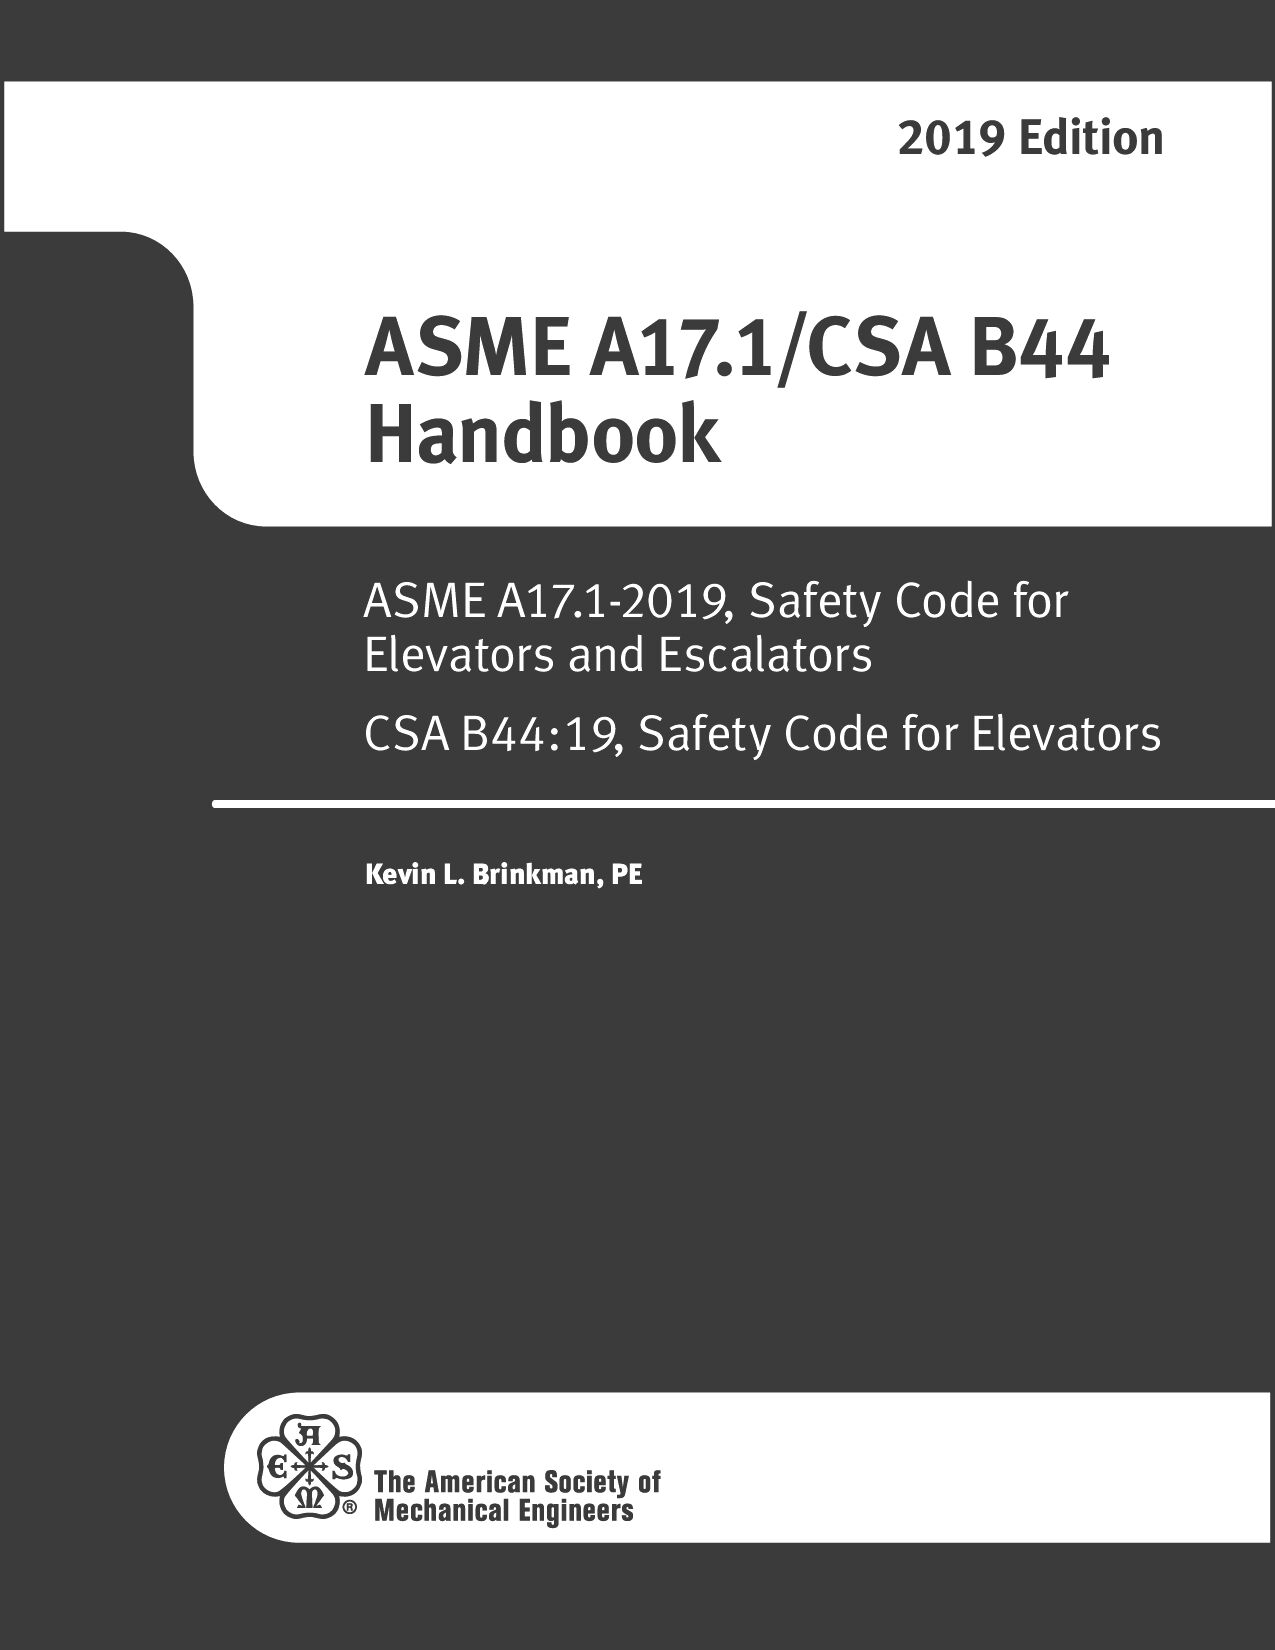 ASME A17.1-2019 Handbook封面图